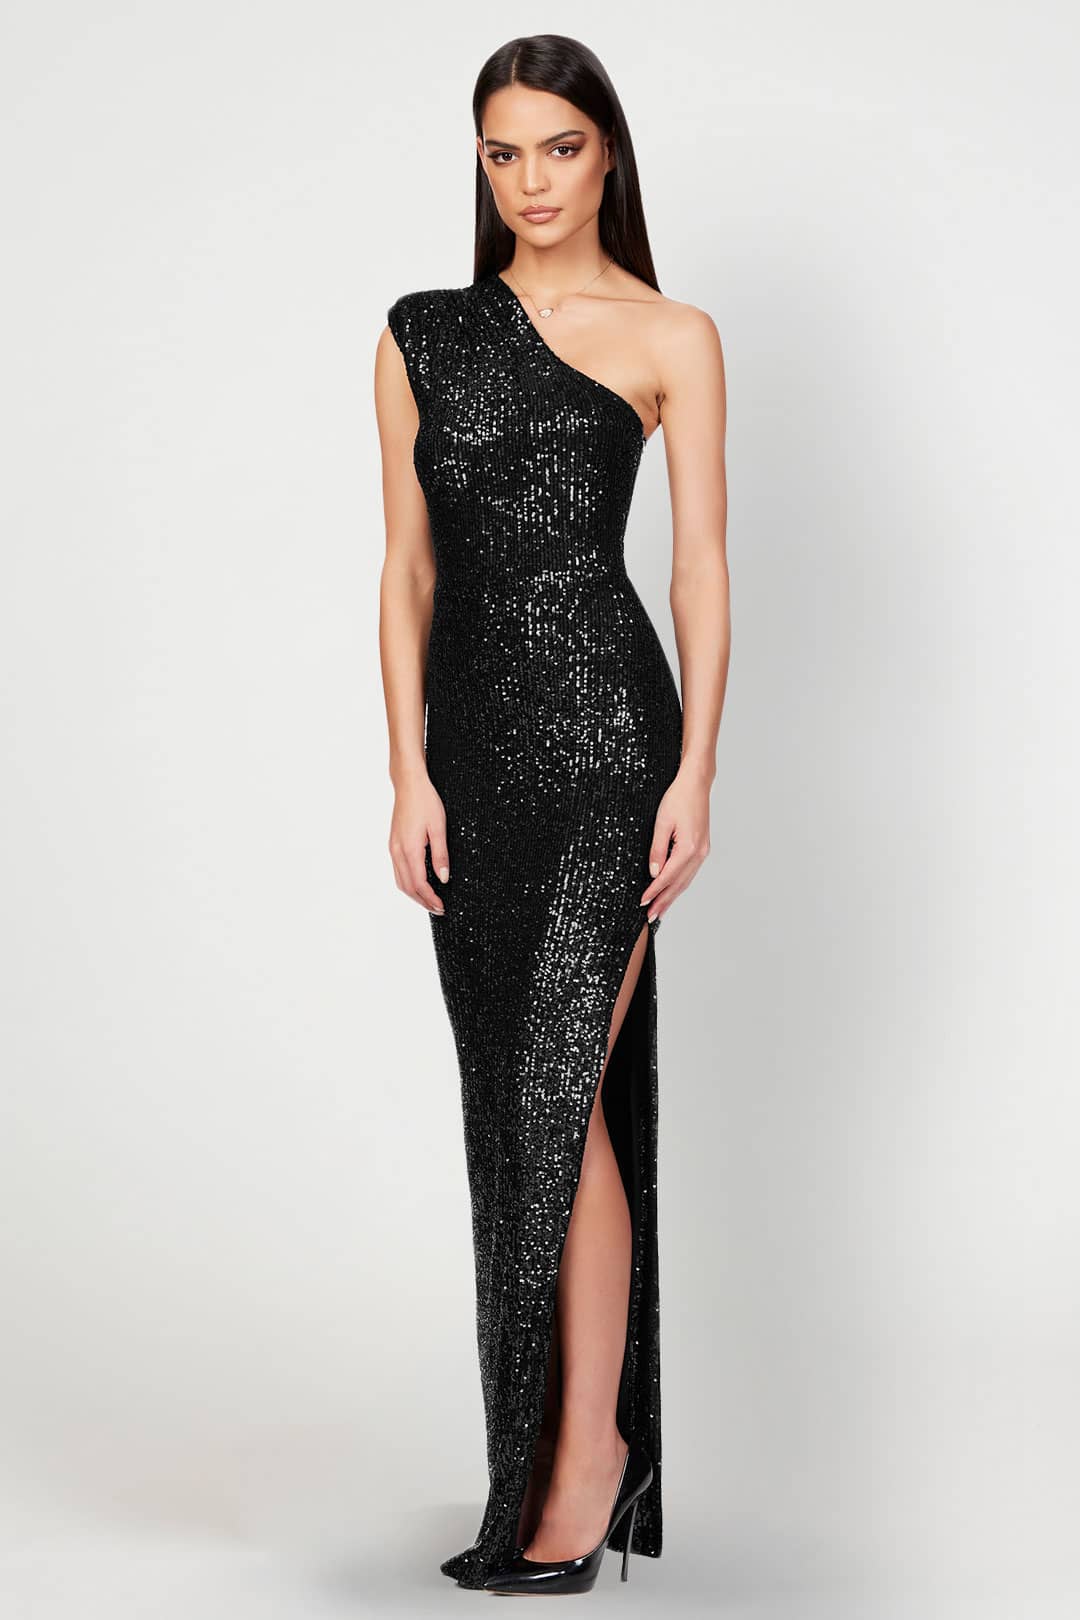 Black Asymmetrical Dress- Nookie Rent A Dress Gown and Dress Rental Side